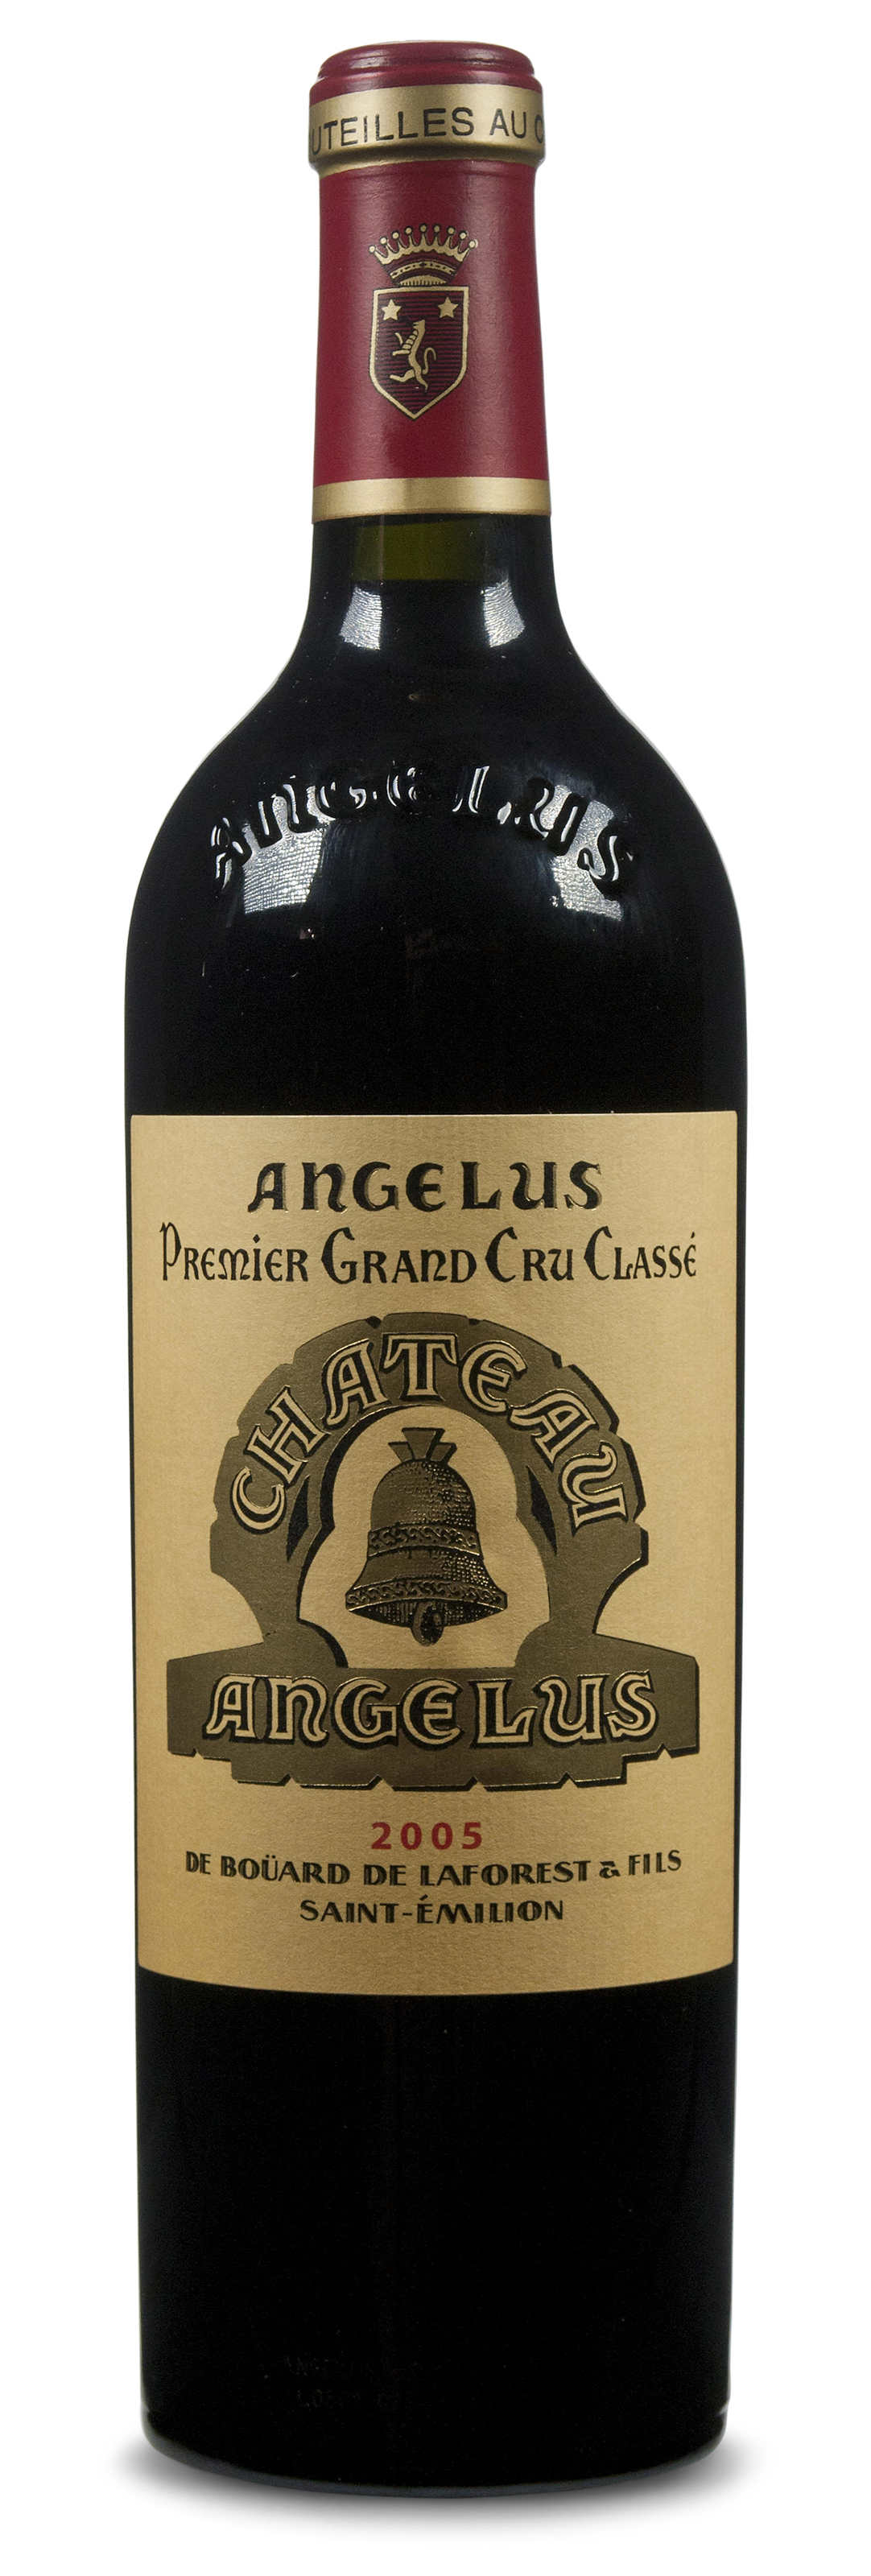 Chteau Anglus - Angelus Grand Cru Class 2012 (750ml)